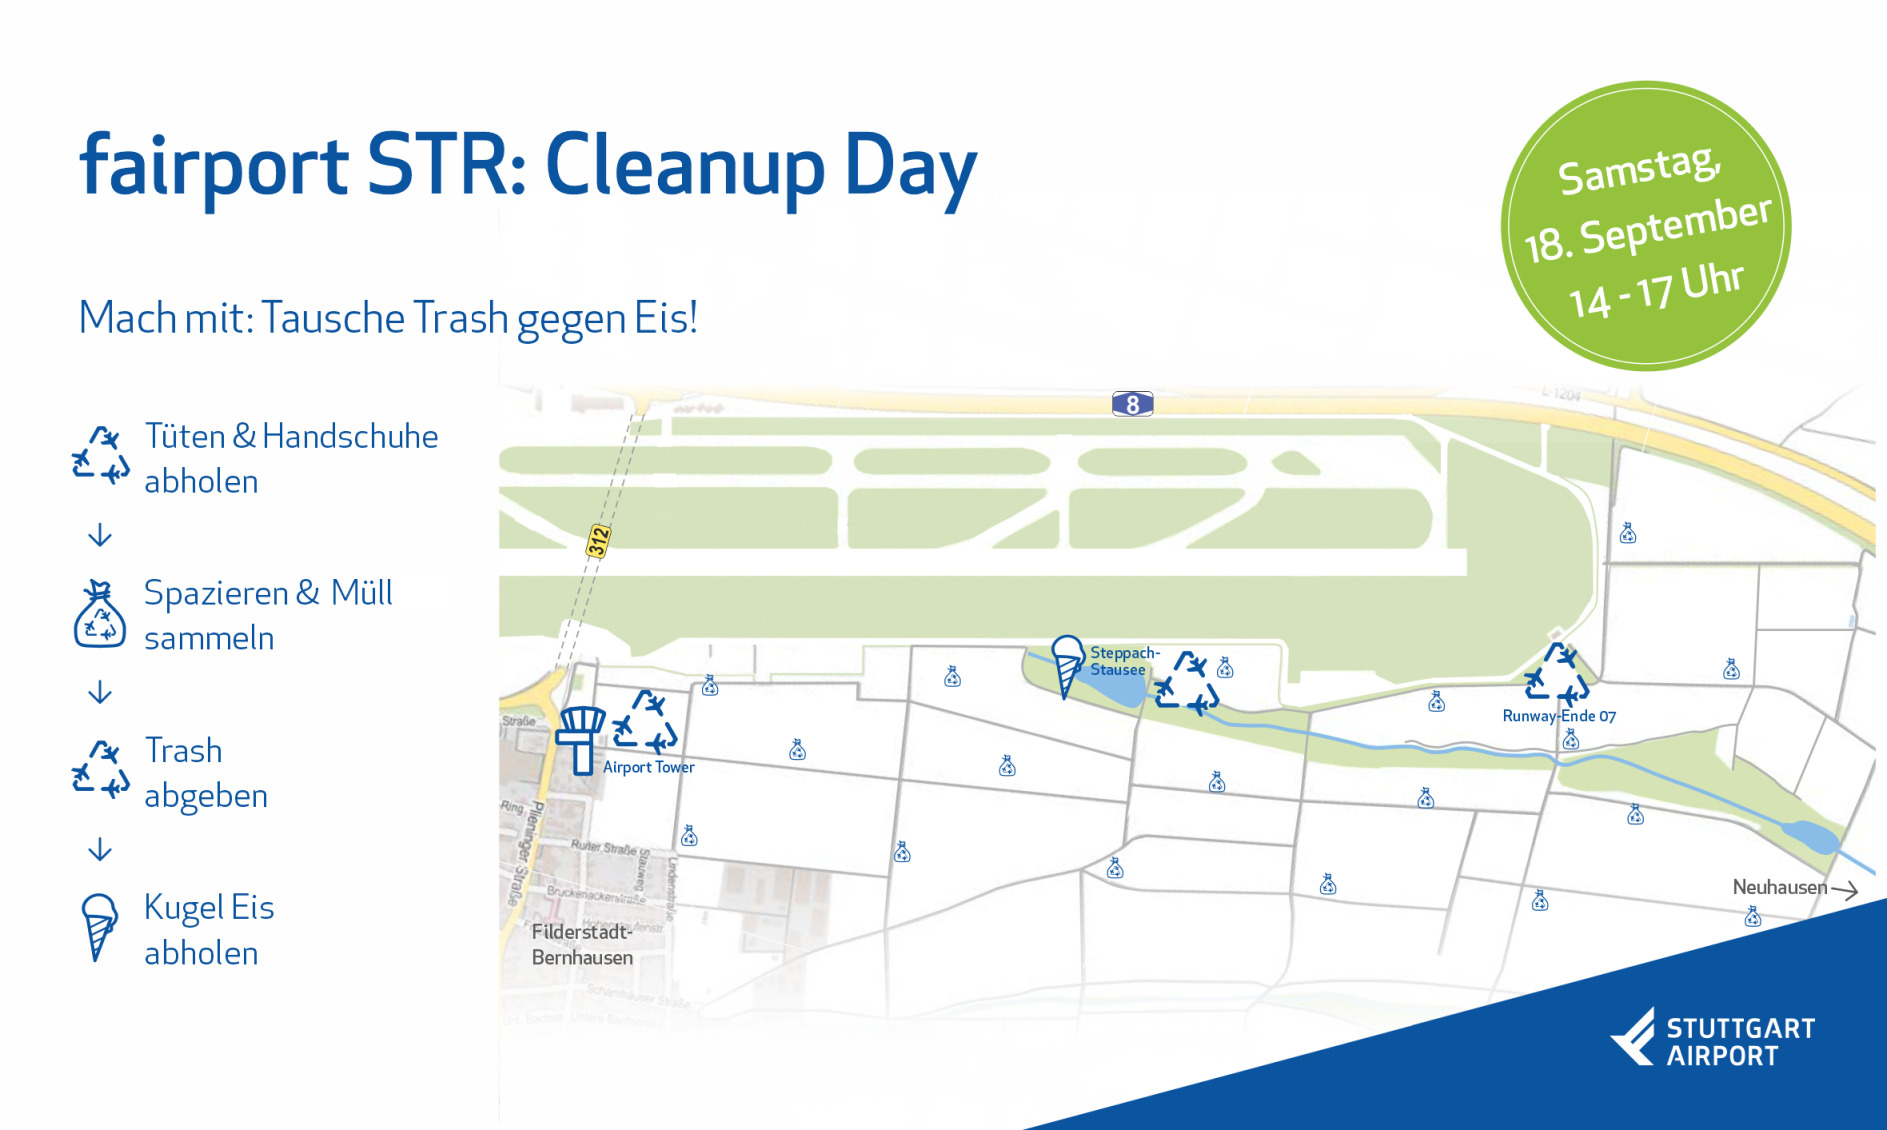 fairport STR Cleanup Day (Baden-Württemberg)